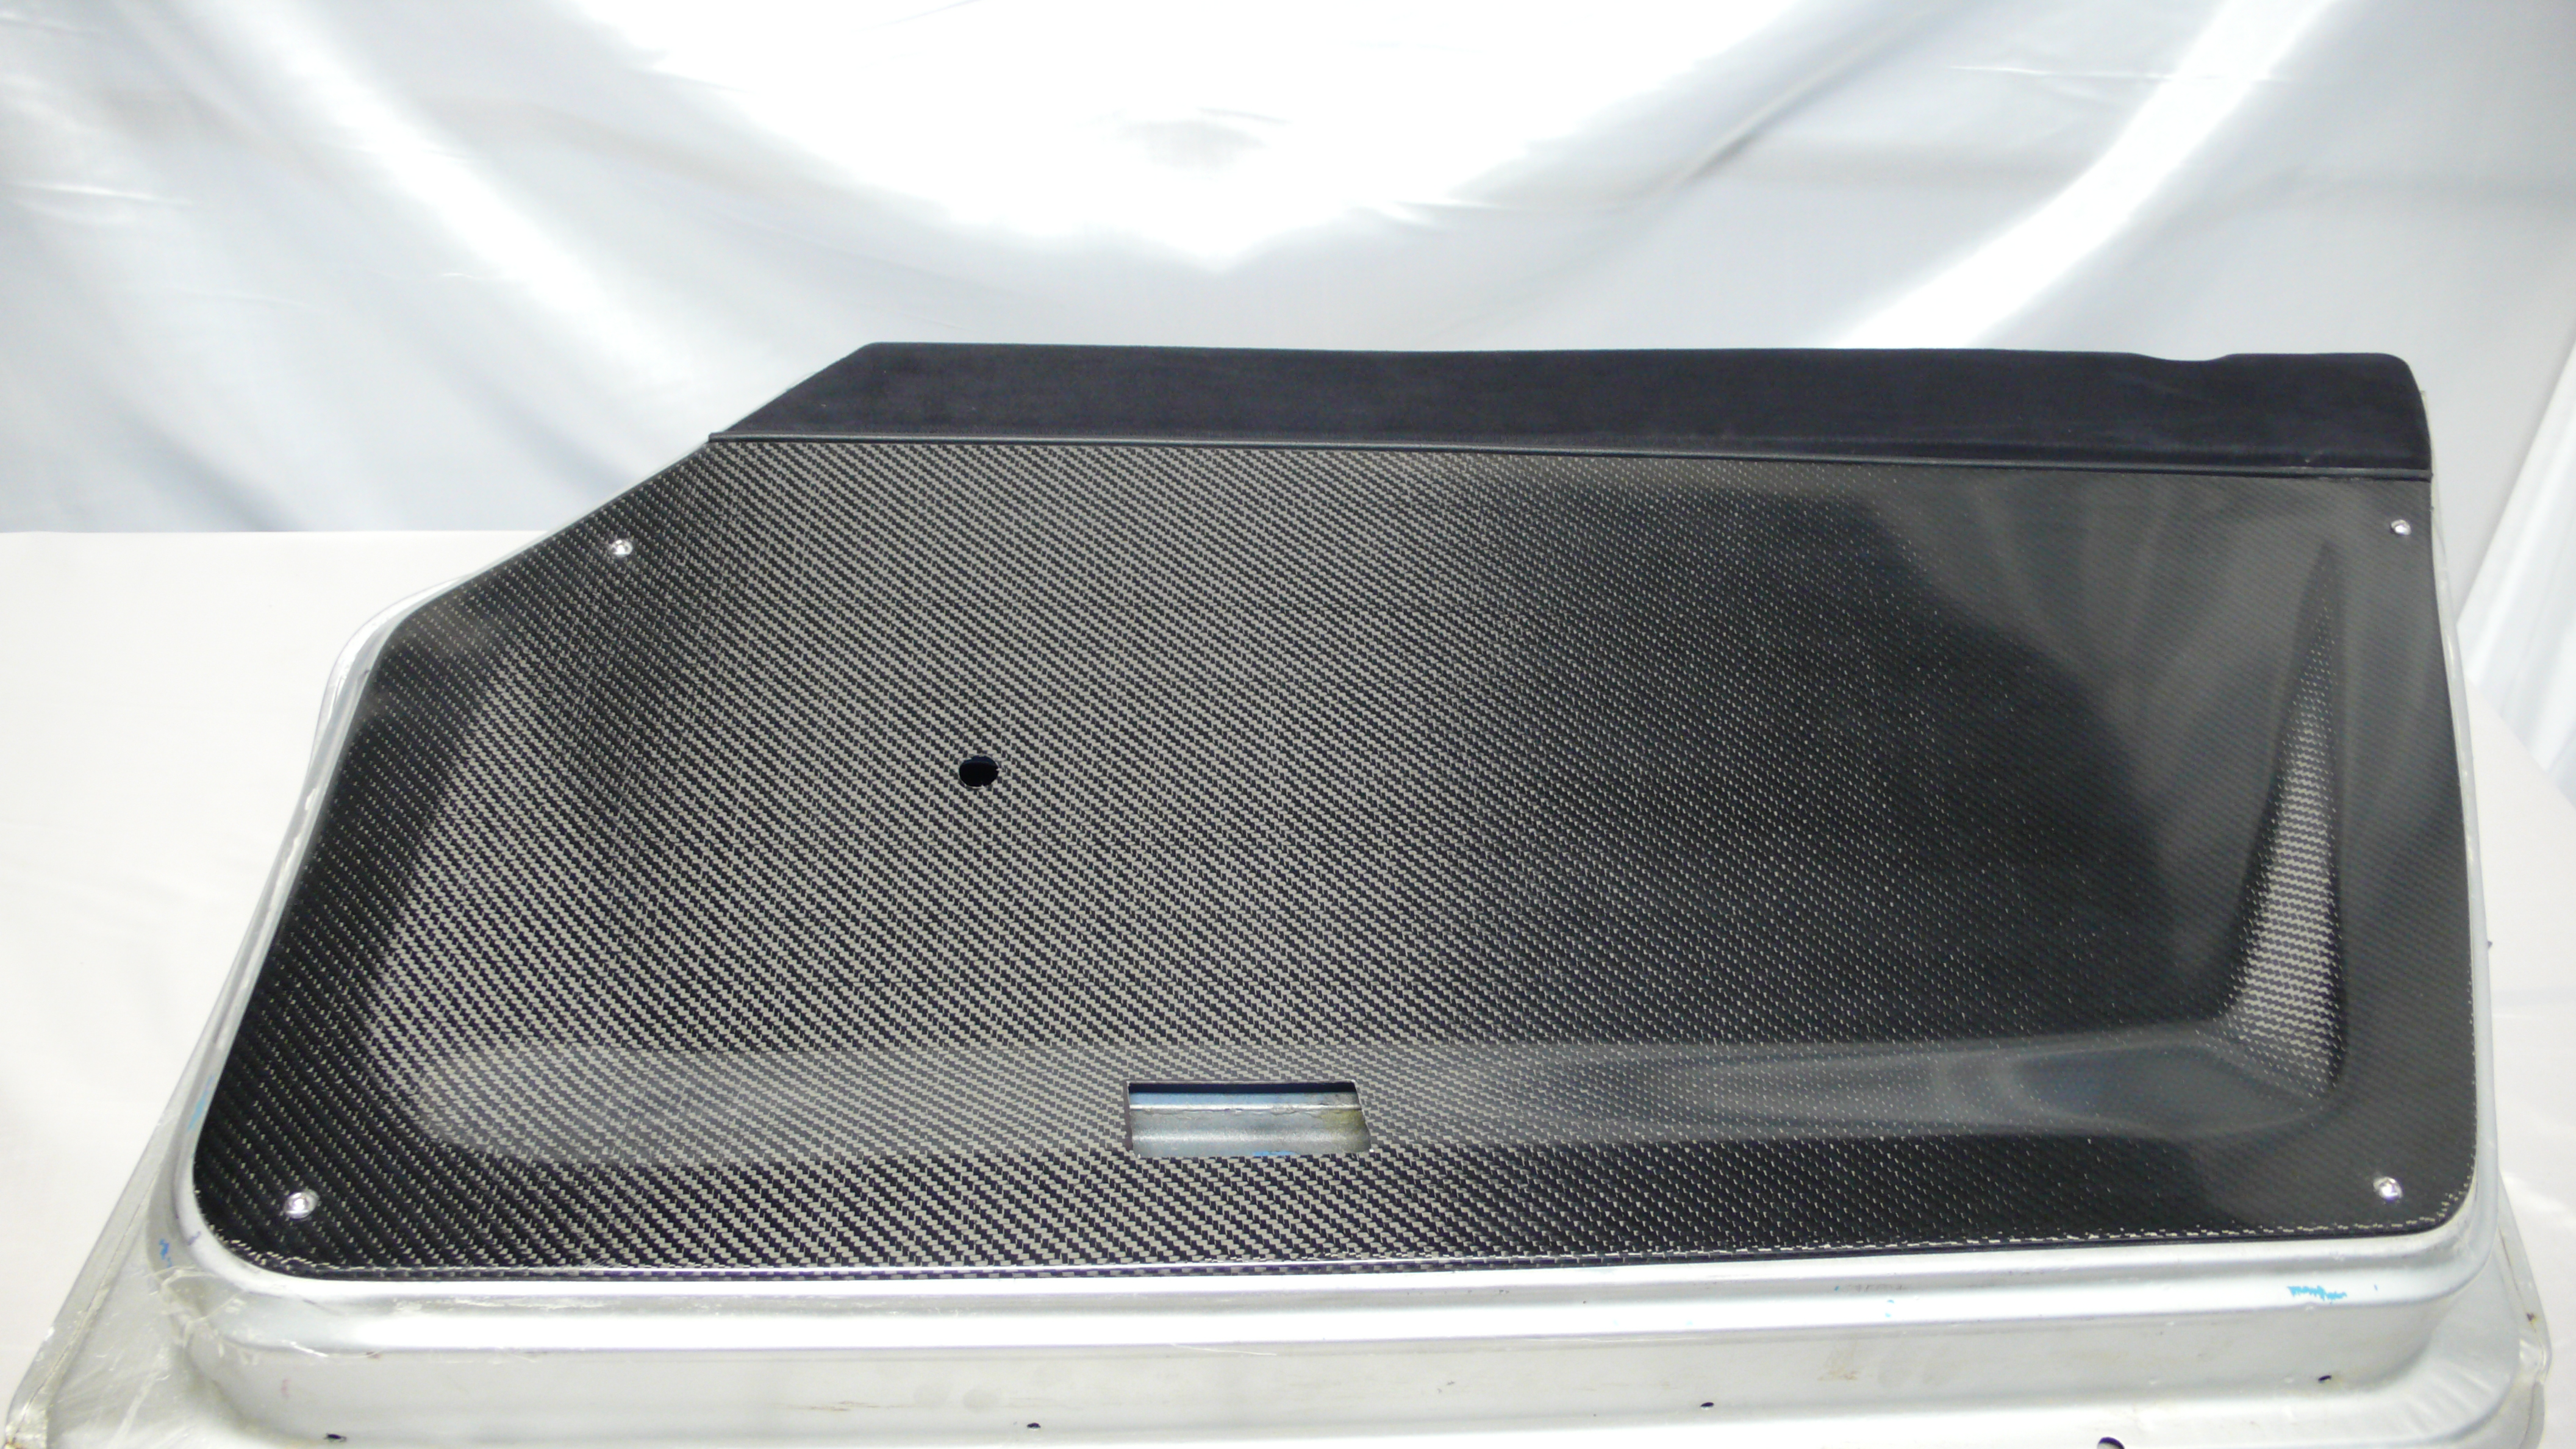 240Z Carbon Fiber Interior Parts - For Sale - The Classic ... ce fuse box 